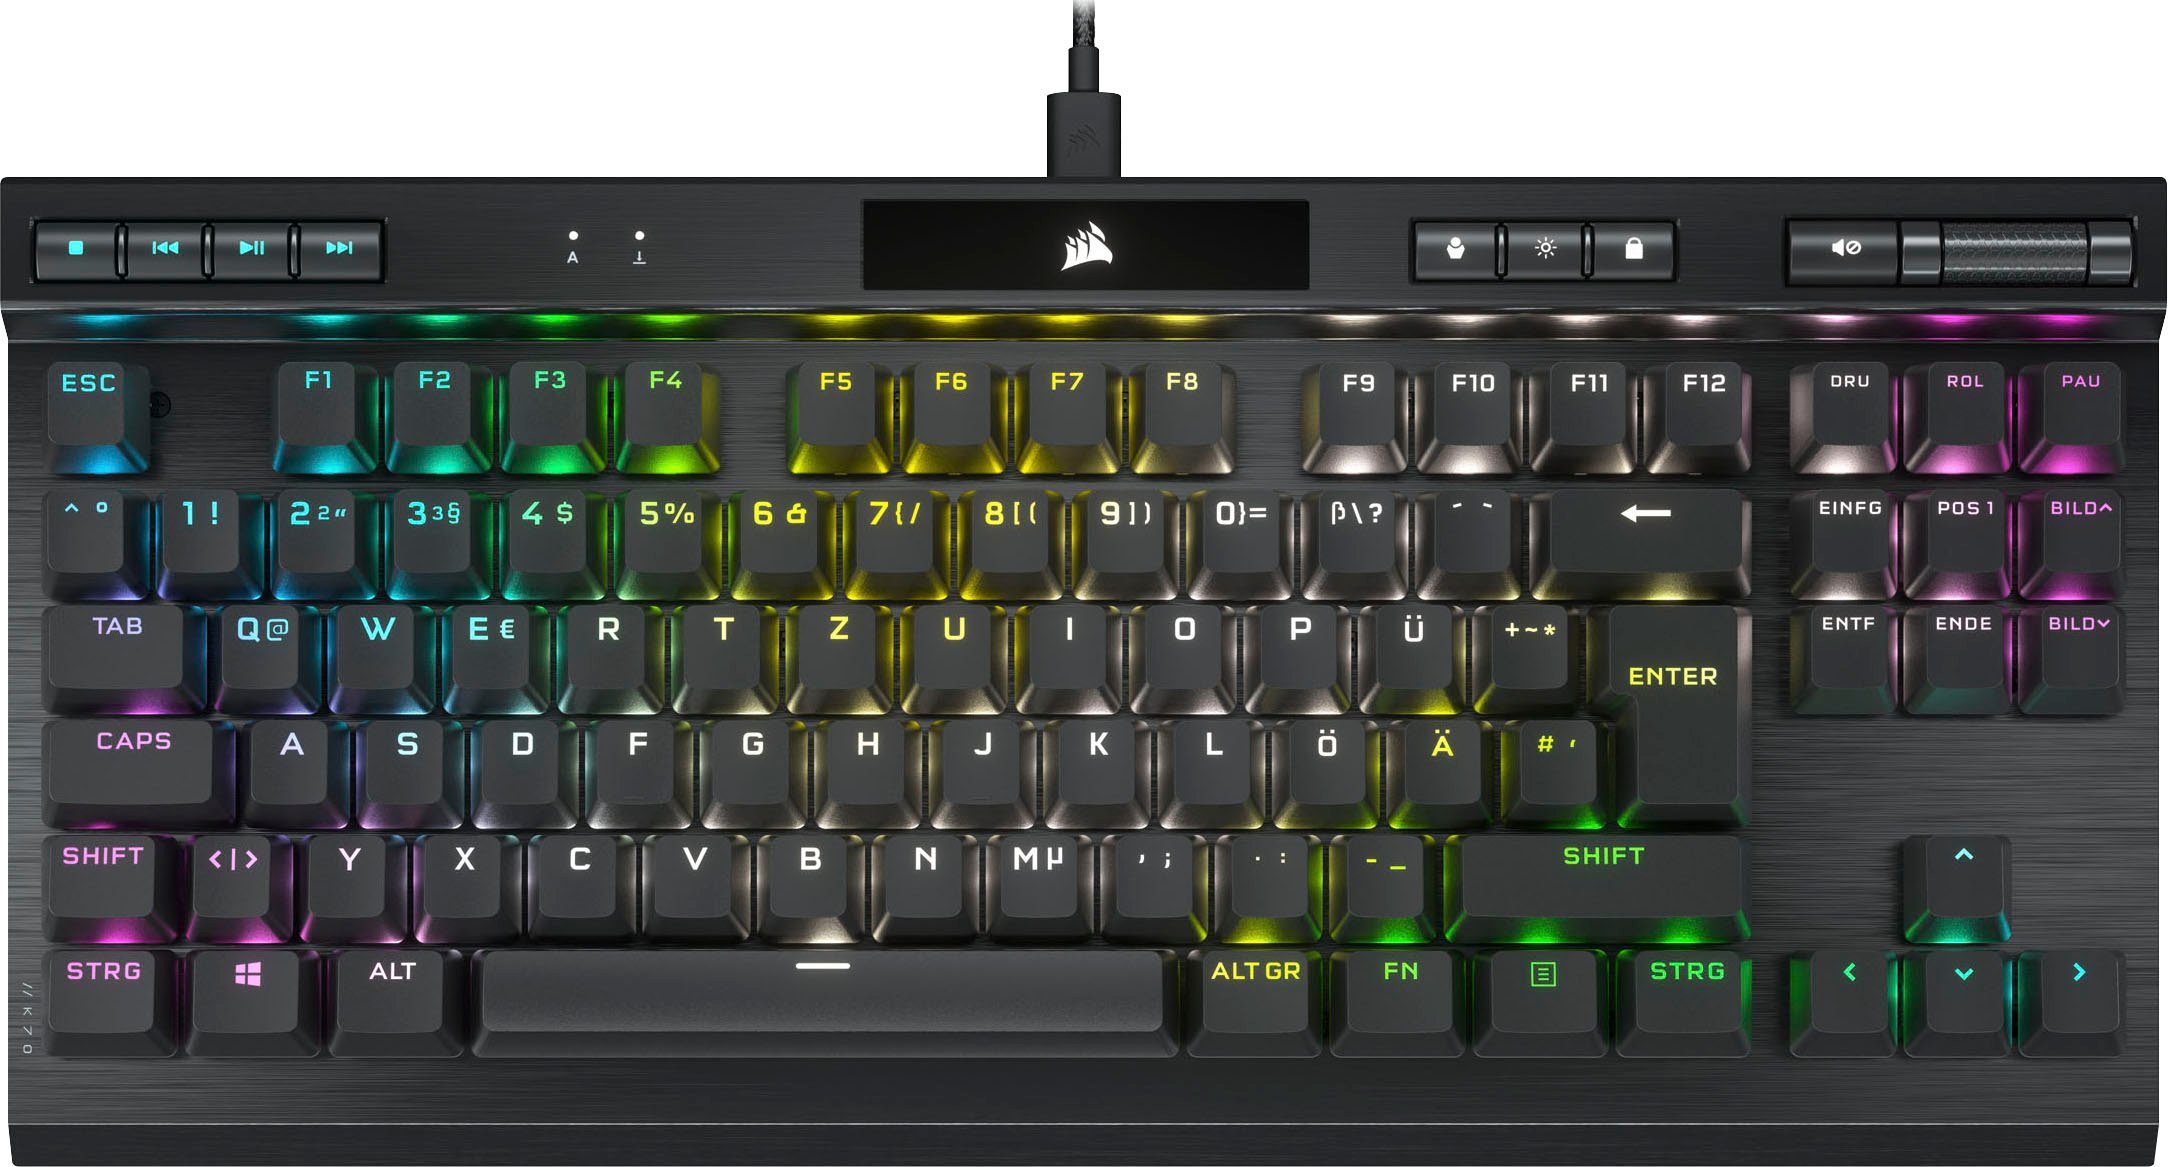 Corsair »K70 TKL RGB CS MX SPEED« Gaming-Tastatur | OTTO